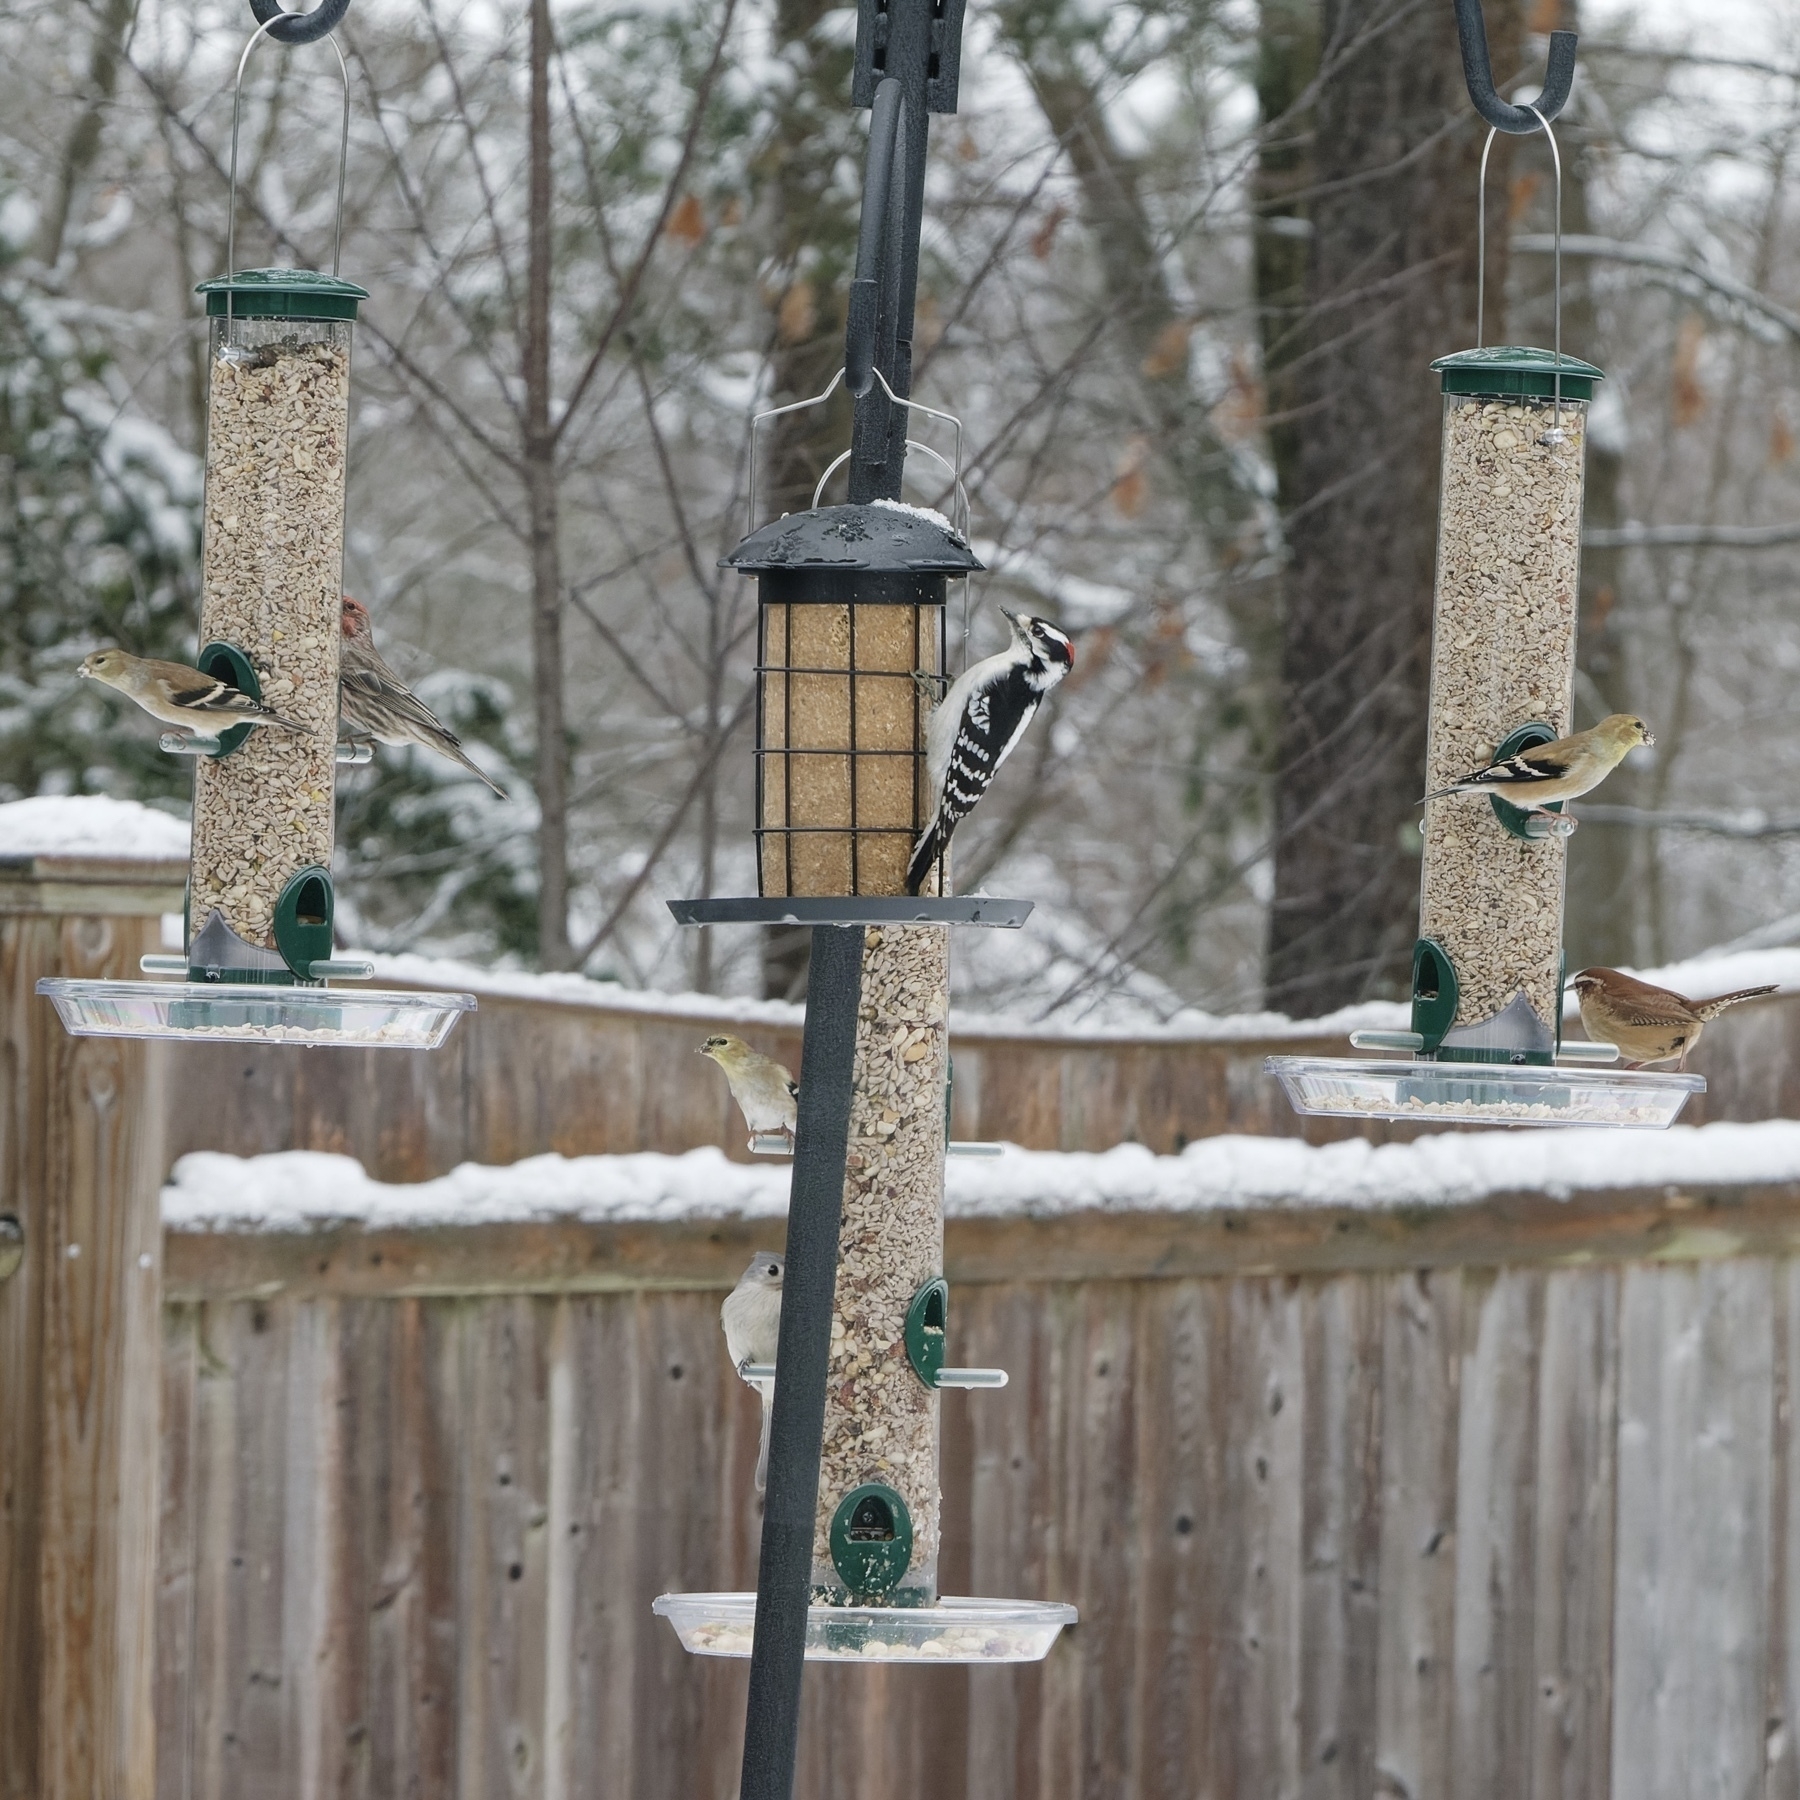 birds at backyard feeder, snowy fence in background